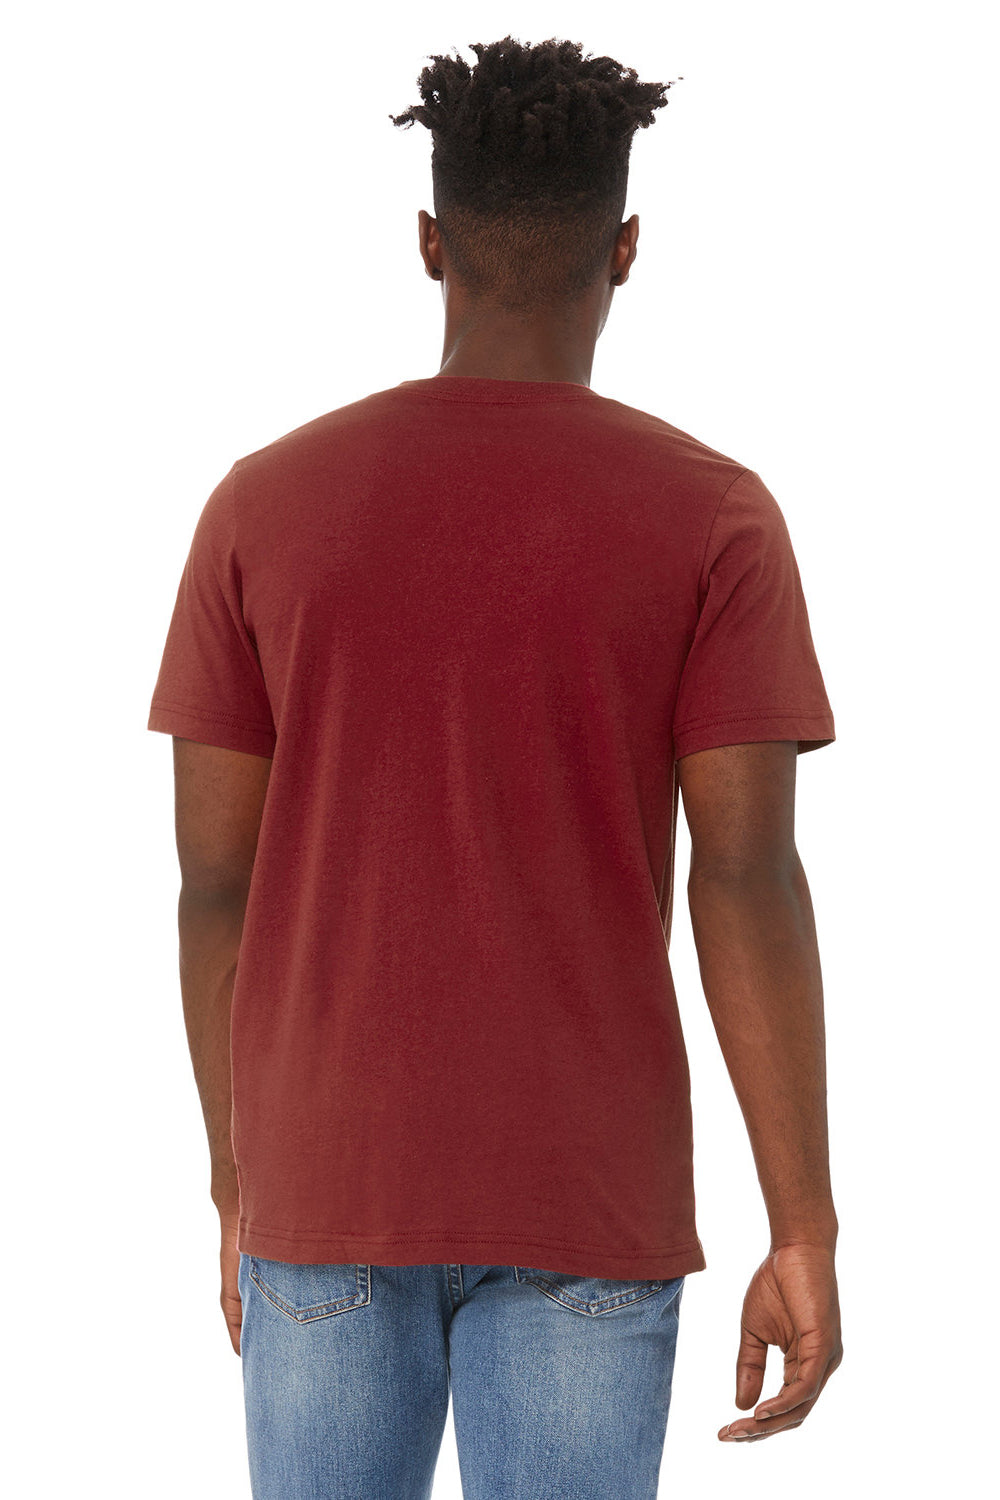 Bella + Canvas BC3005/3005/3655C Mens Jersey Short Sleeve V-Neck T-Shirt Cardinal Red Model Back